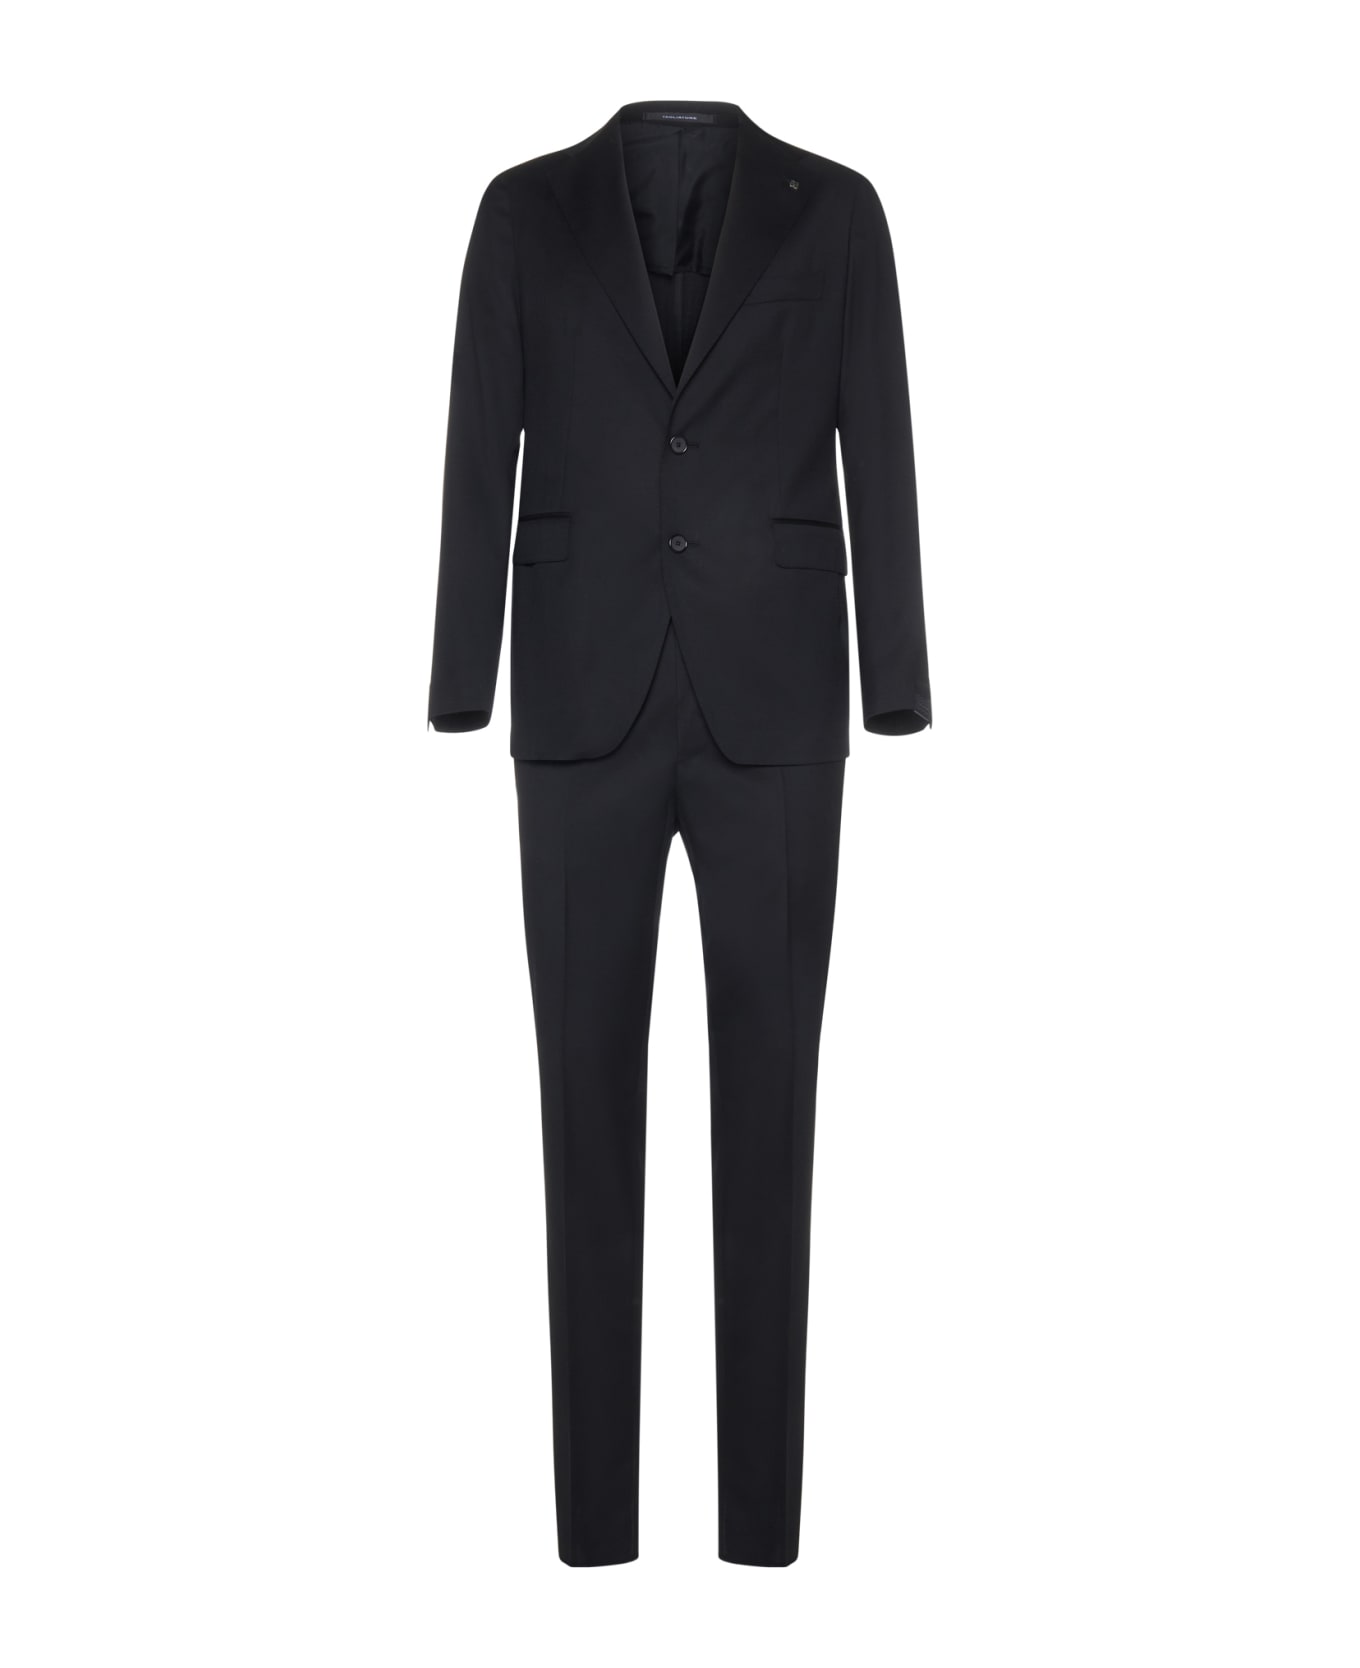 Tagliatore Suit - Black